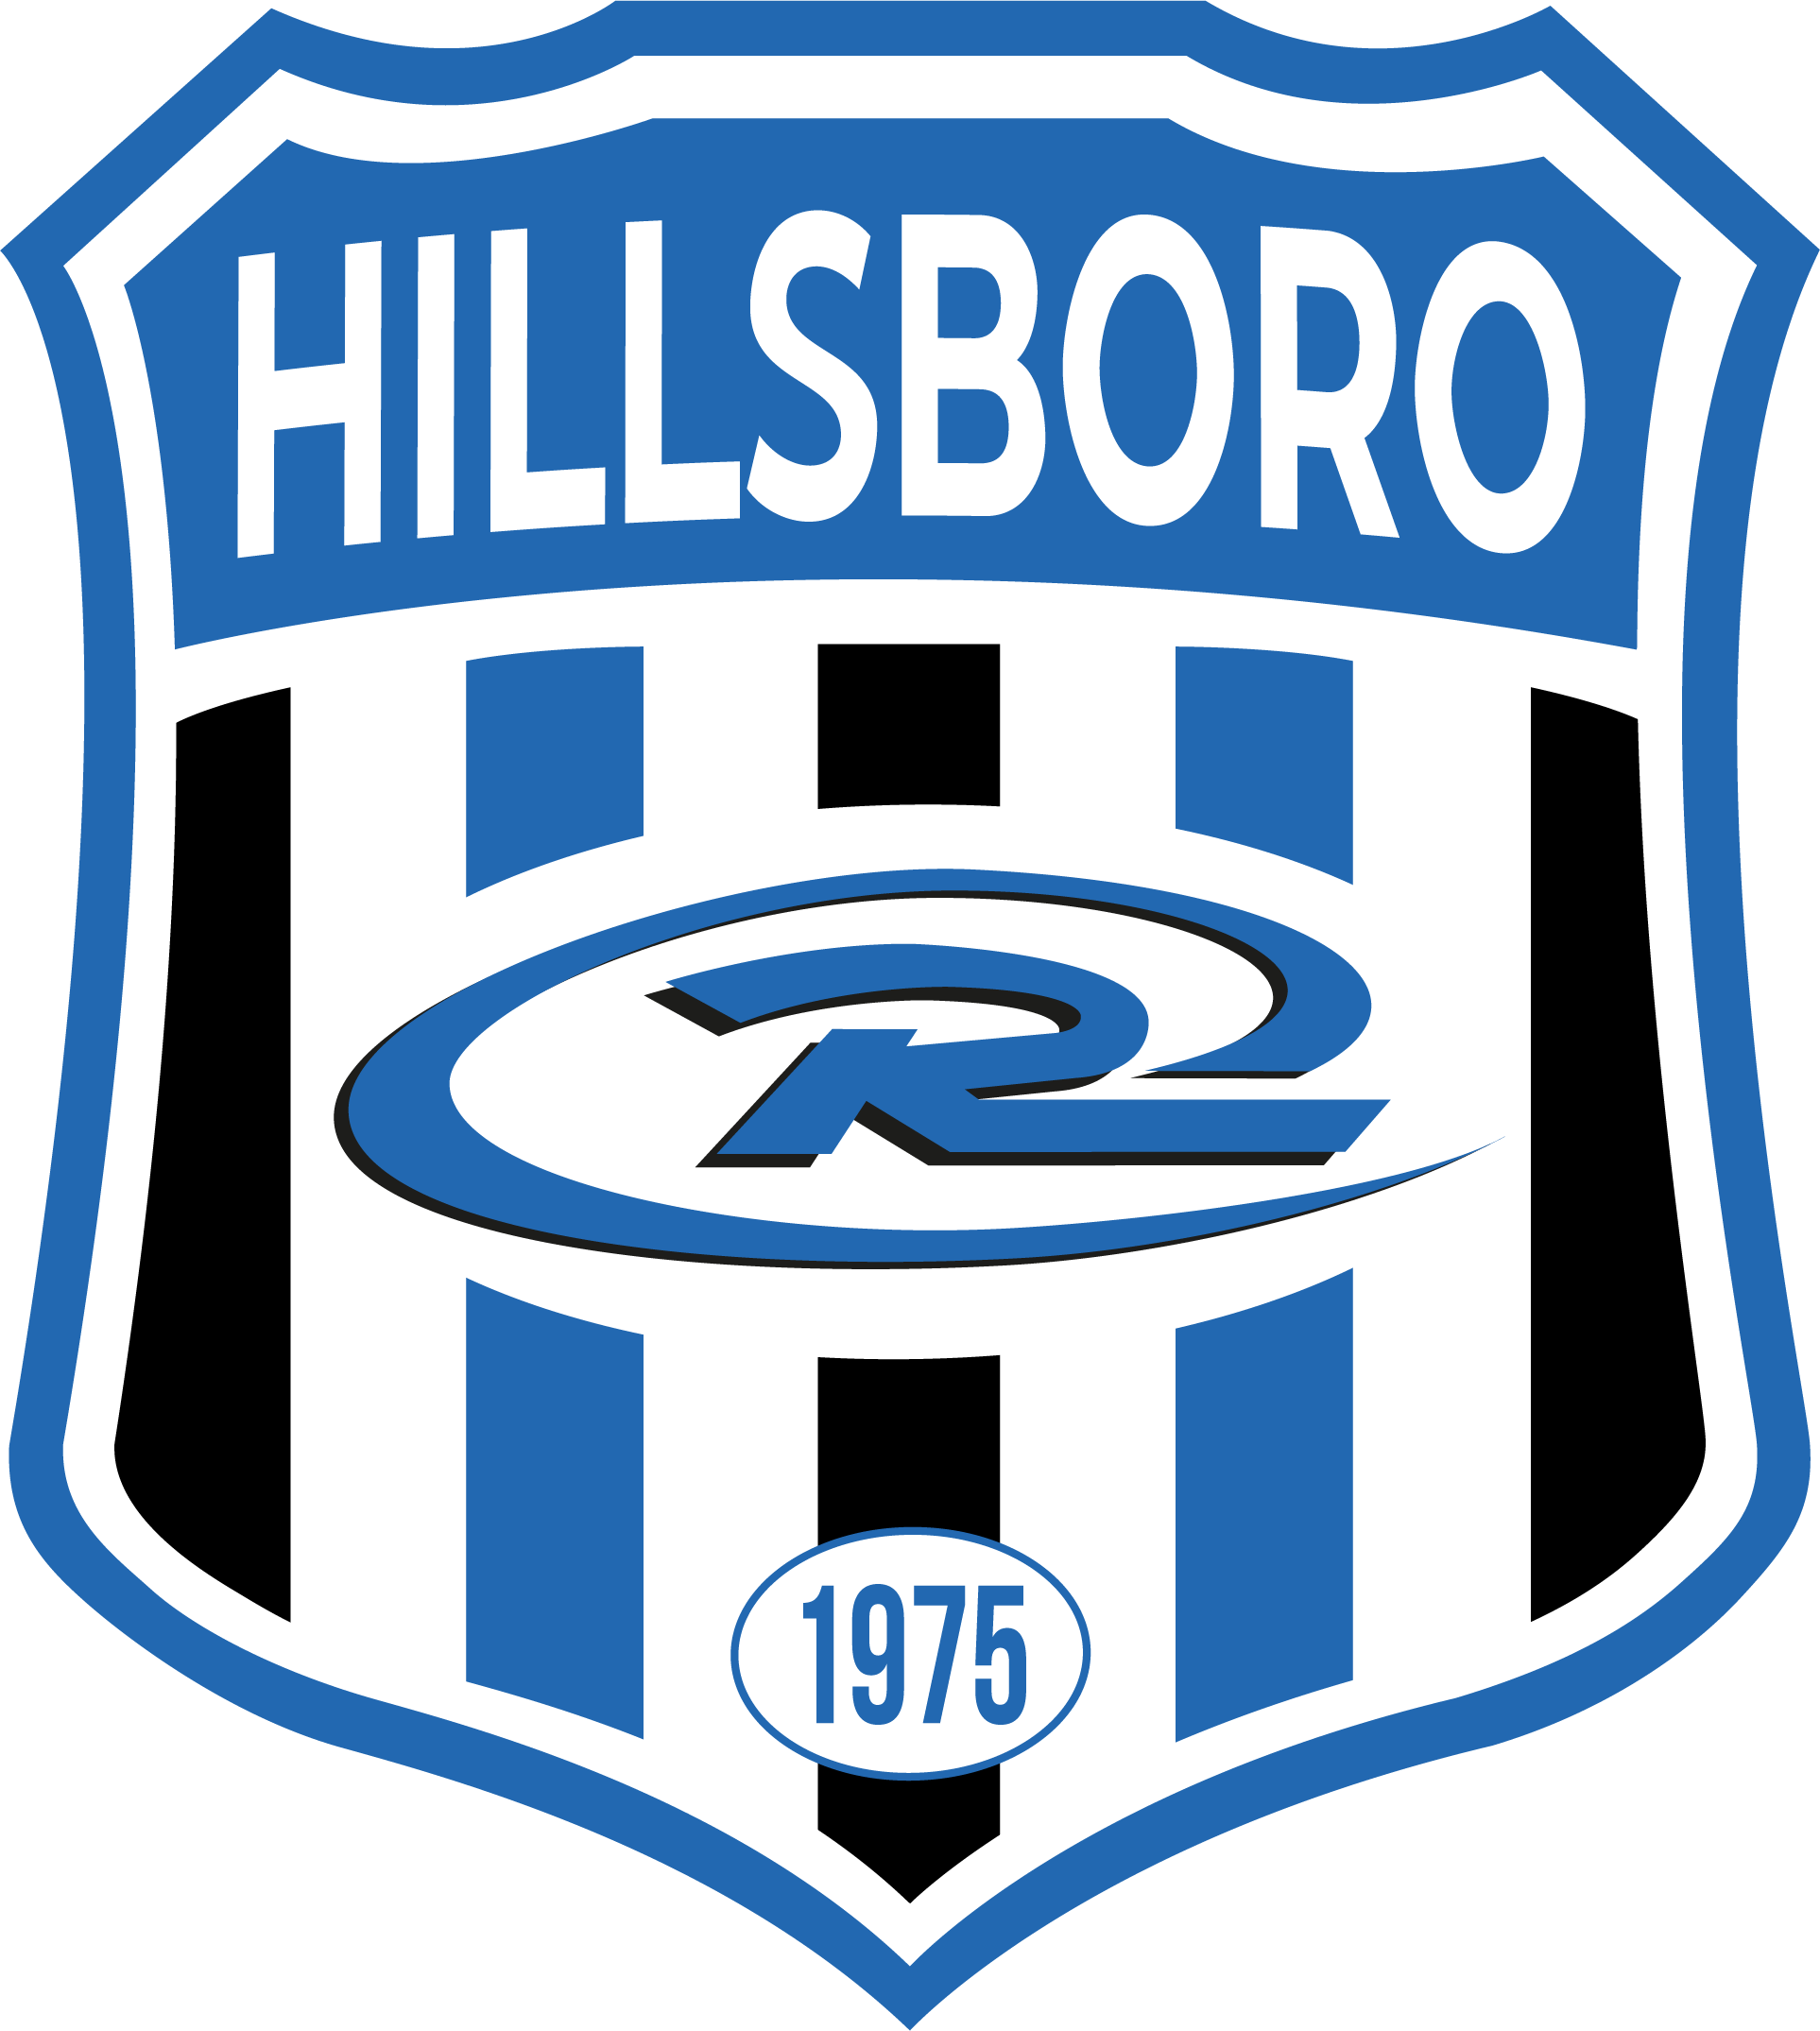 Hillsboro Rush logo